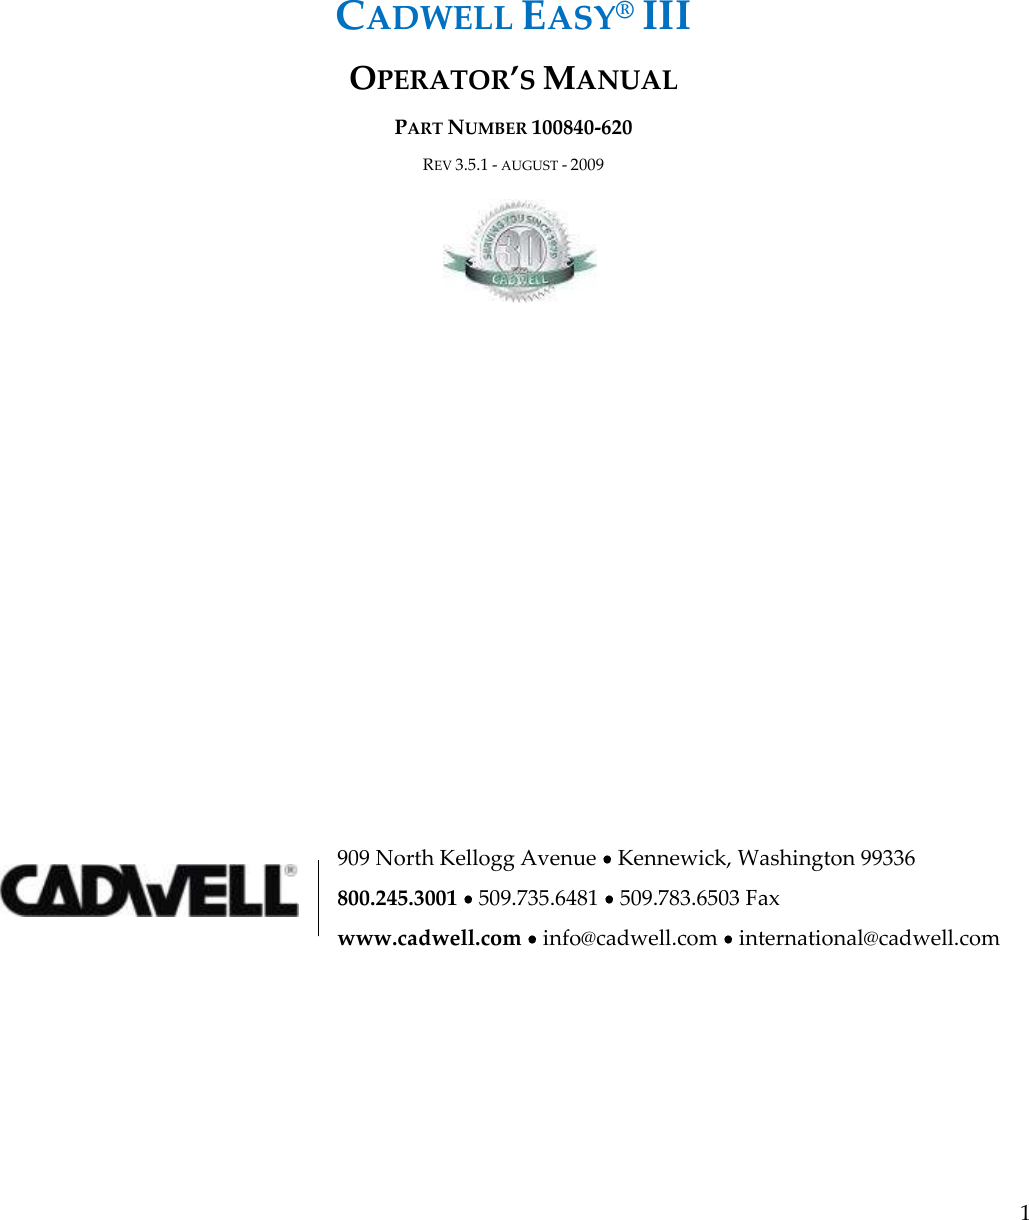  1     CADWELL EASY® III  OPERATOR’S MANUAL PART NUMBER 100840-620 REV 3.5.1 - AUGUST - 2009                  909 North Kellogg Avenue   Kennewick, Washington 99336 800.245.3001   509.735.6481   509.783.6503 Fax www.cadwell.com   info@cadwell.com   international@cadwell.com    